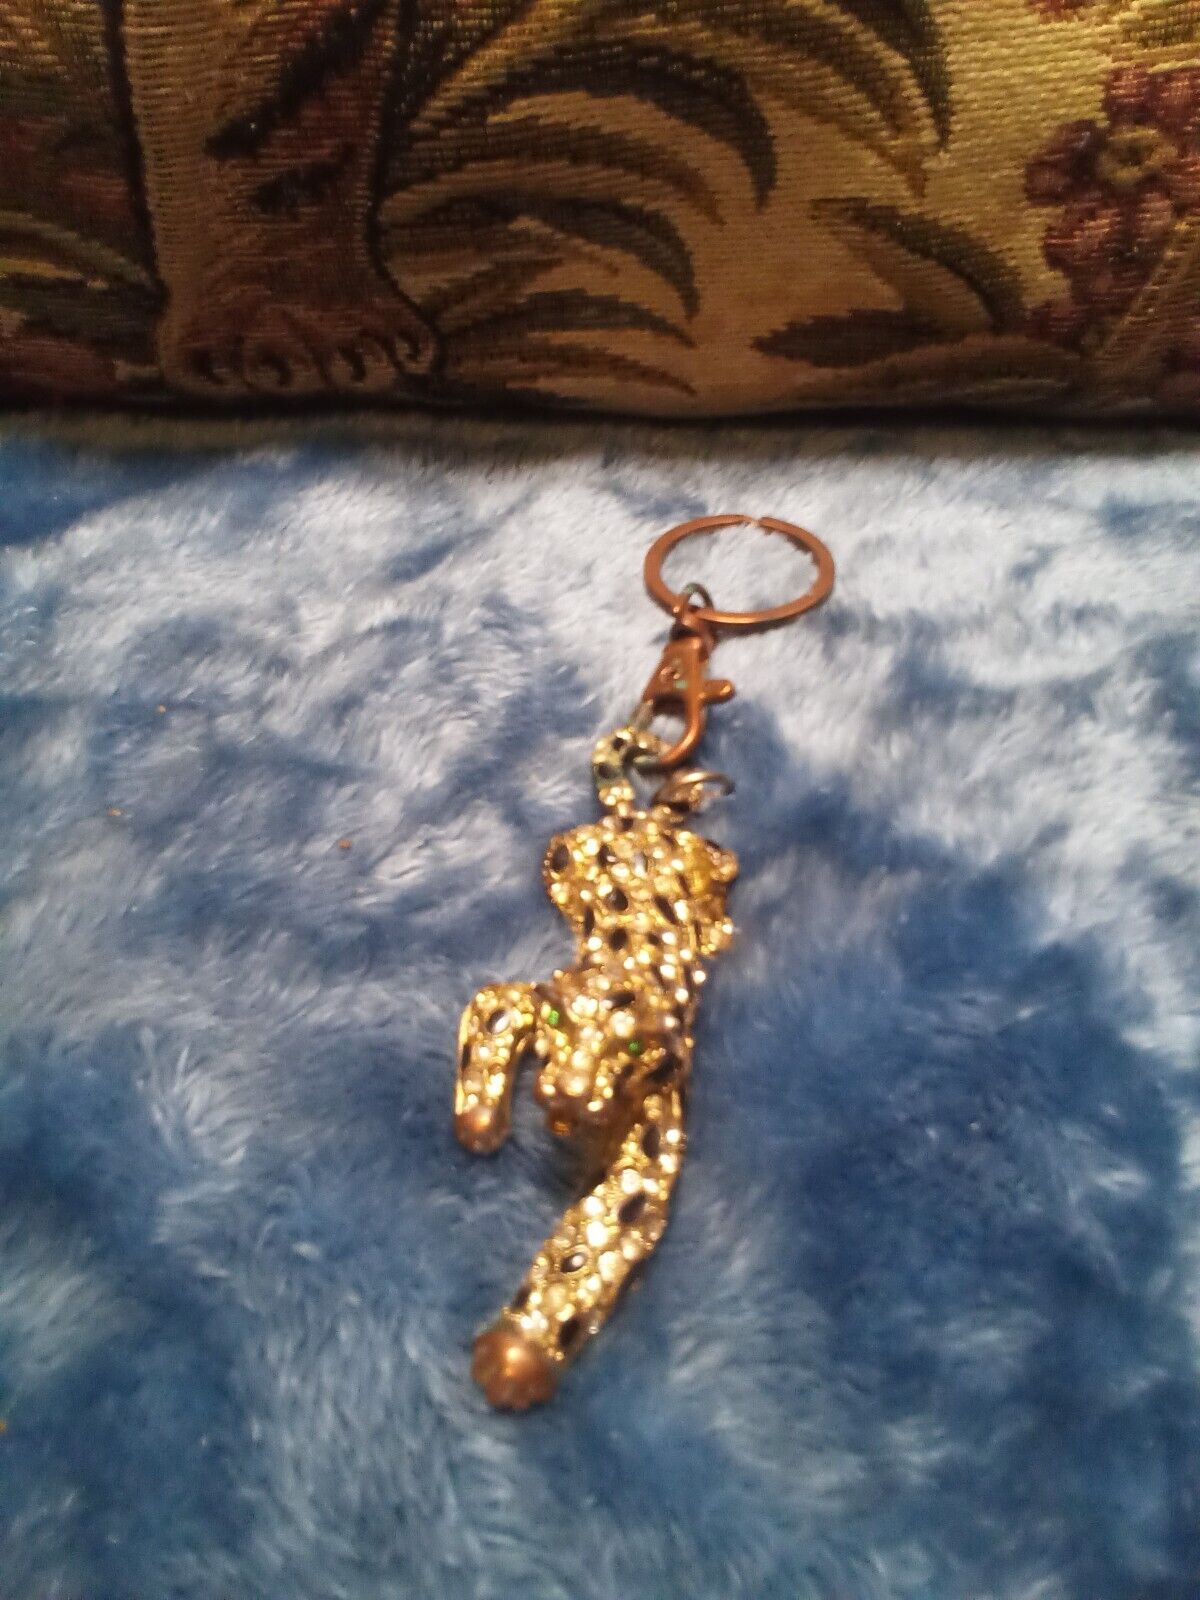 Copper jaguar key ring,lots of bling,some tarnish to rings